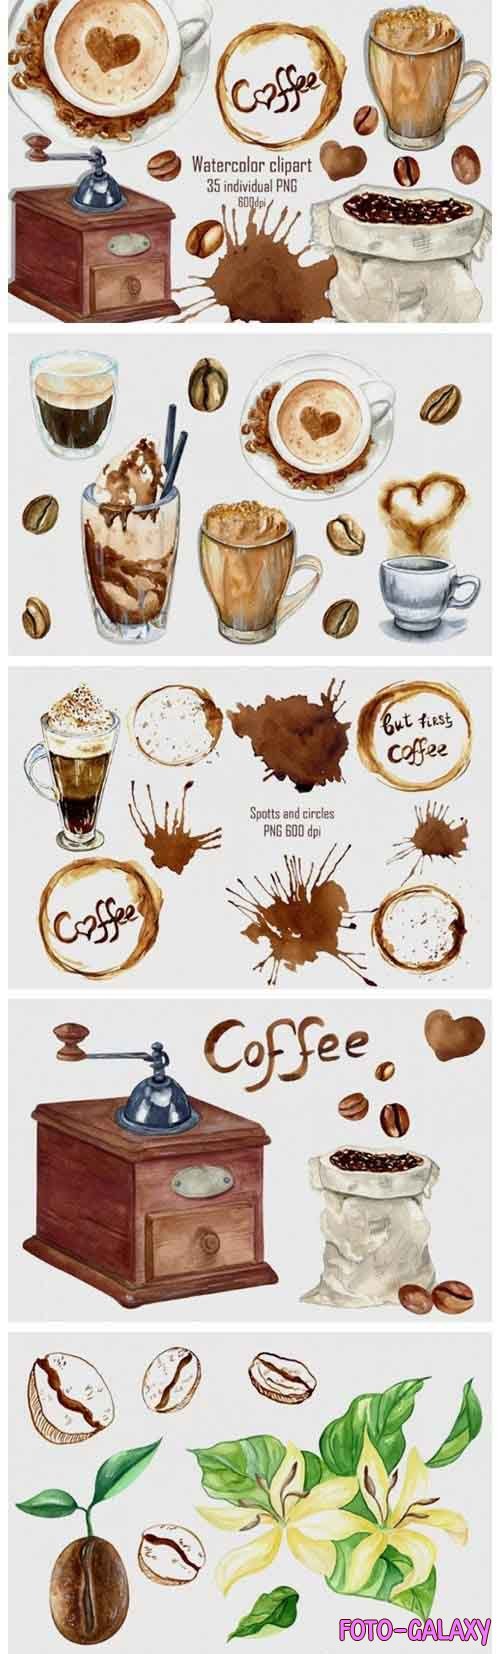 Watercolor coffee clipart, Coffee png, Coffee shop menu - 1205099